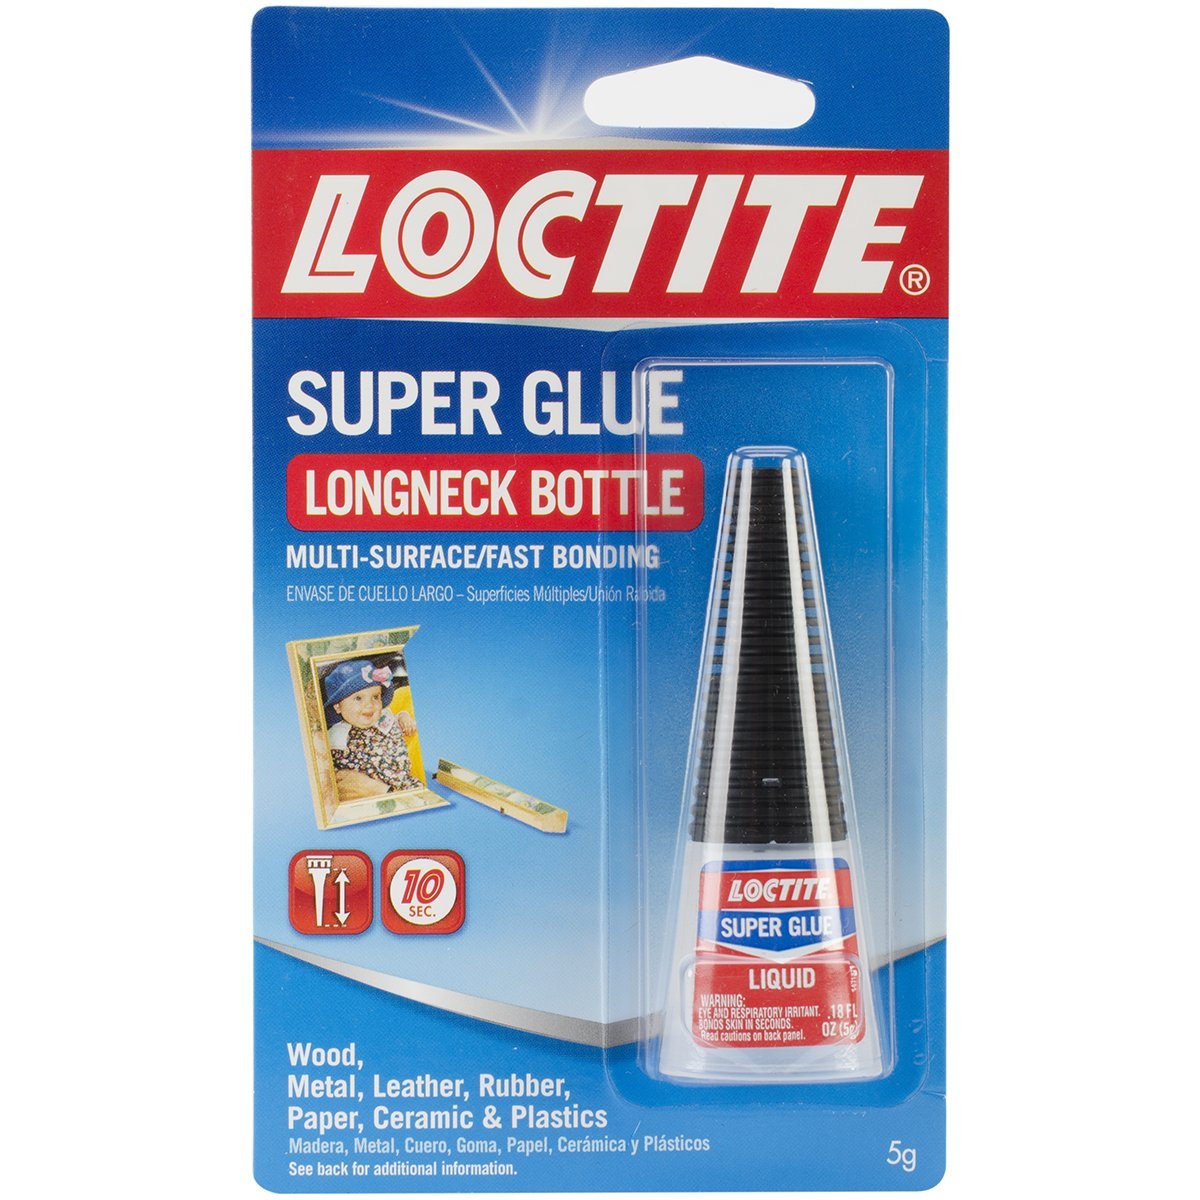 Loctite 230992 Super Glue Longneck Bottle for Hard-to-Reach Places, 5-Gram